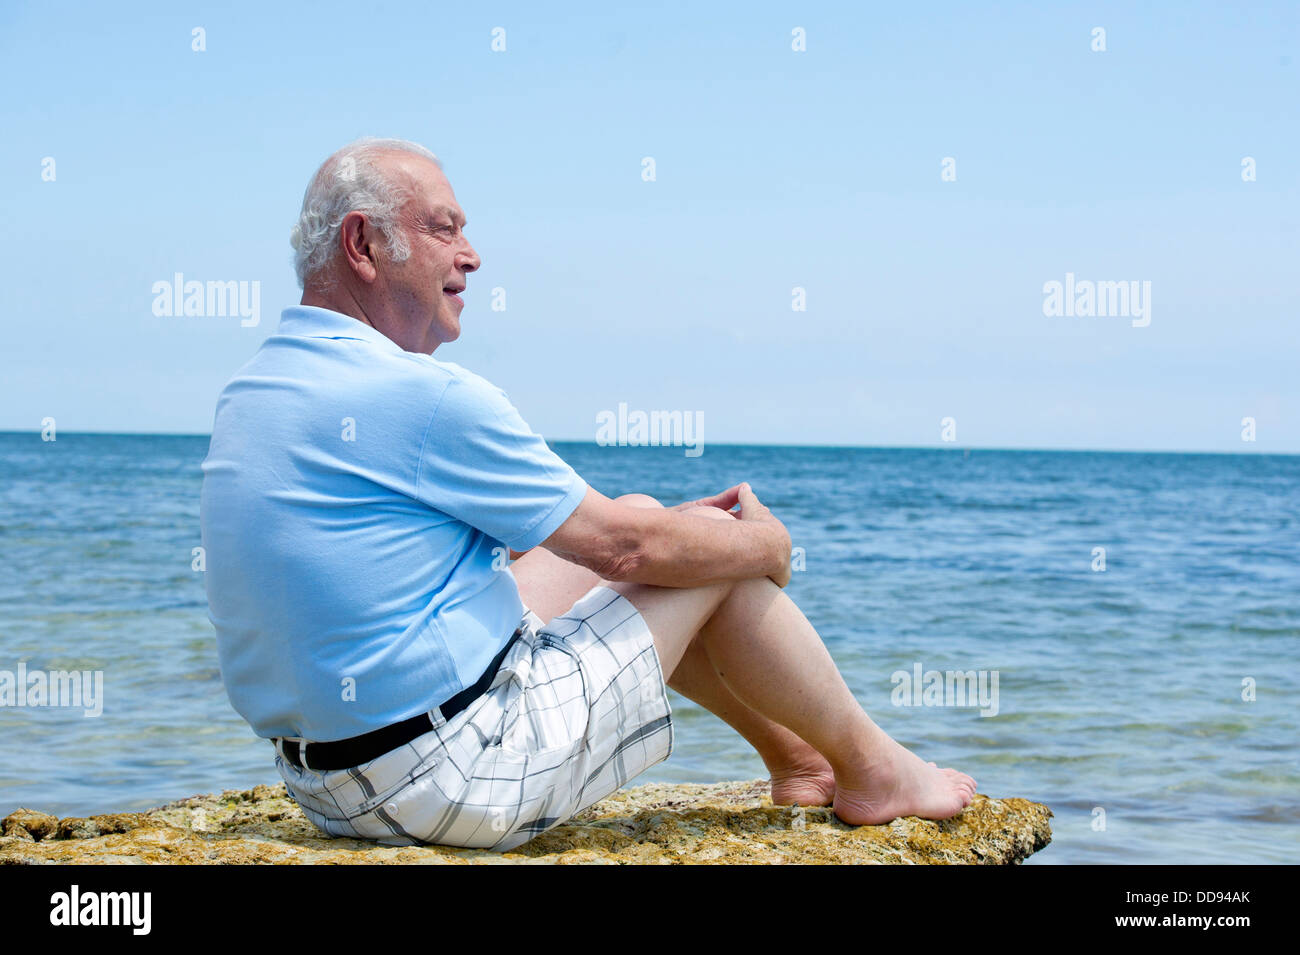 Hispanic man relaxing on beach Stock Photo